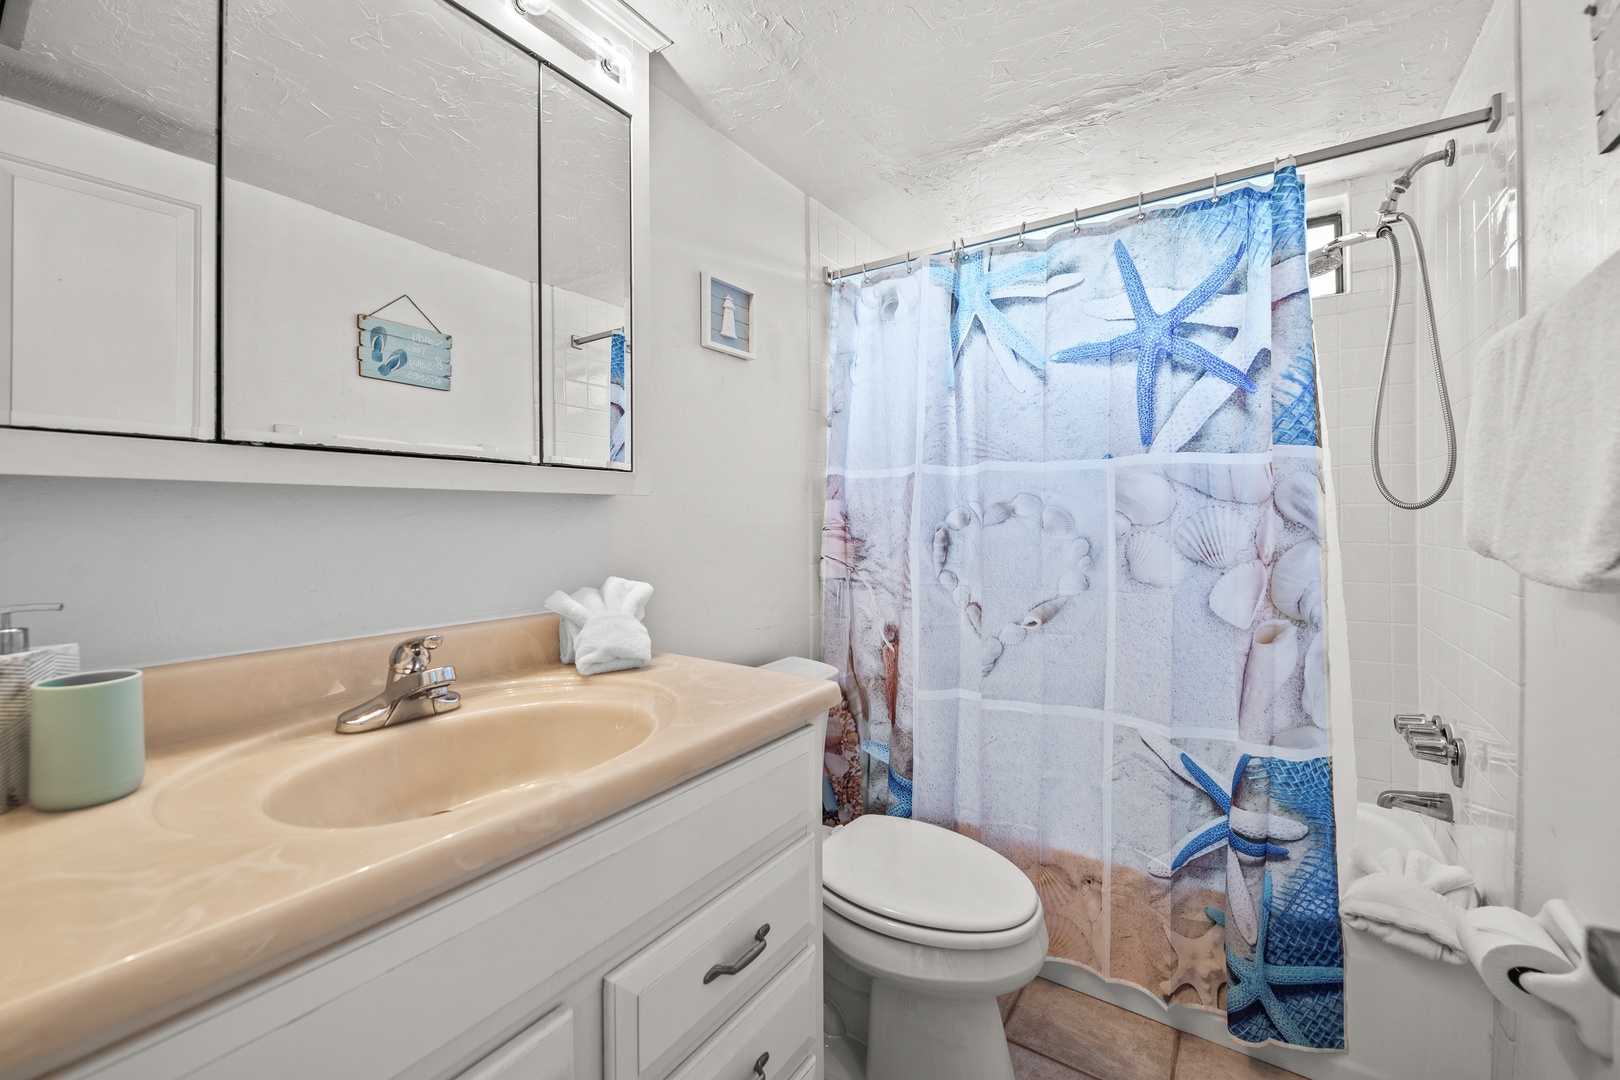 Second Bathroom - Shower/Tub Combo